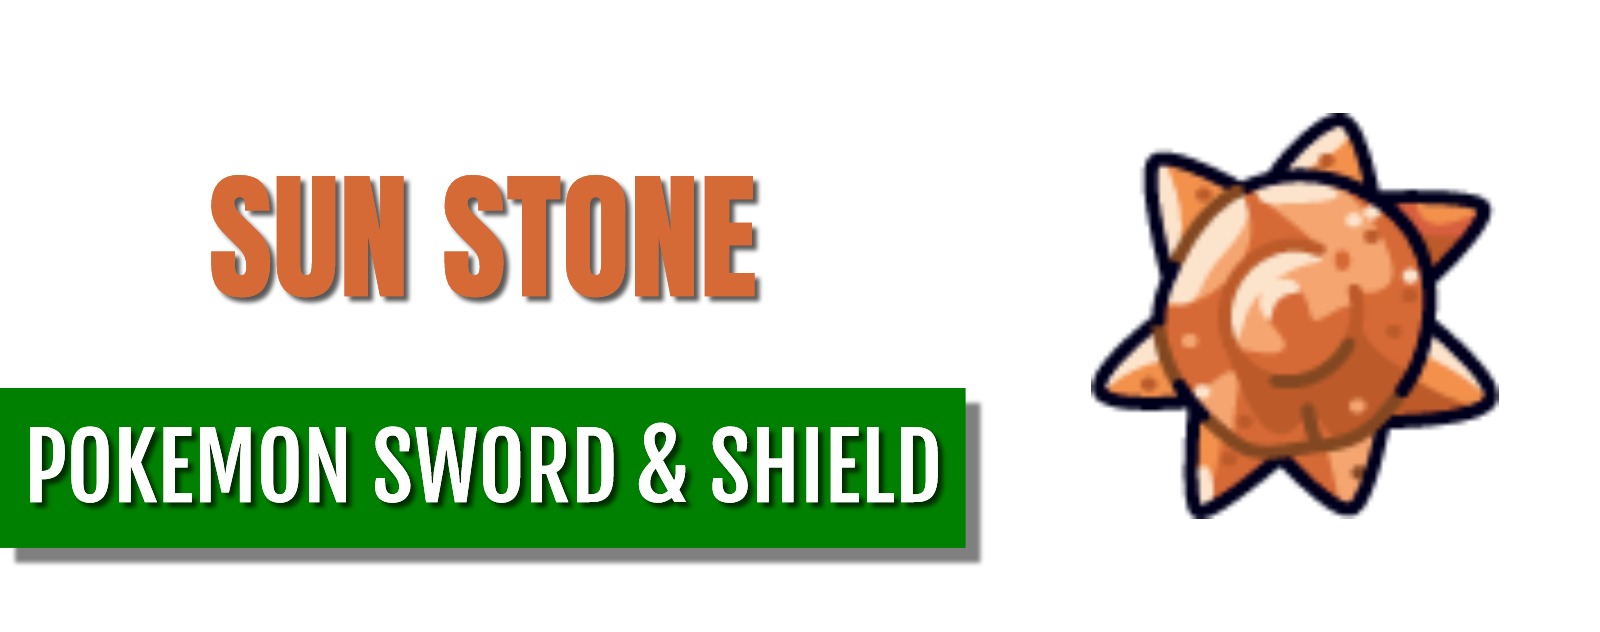 Sun stone pokemon sword and shield